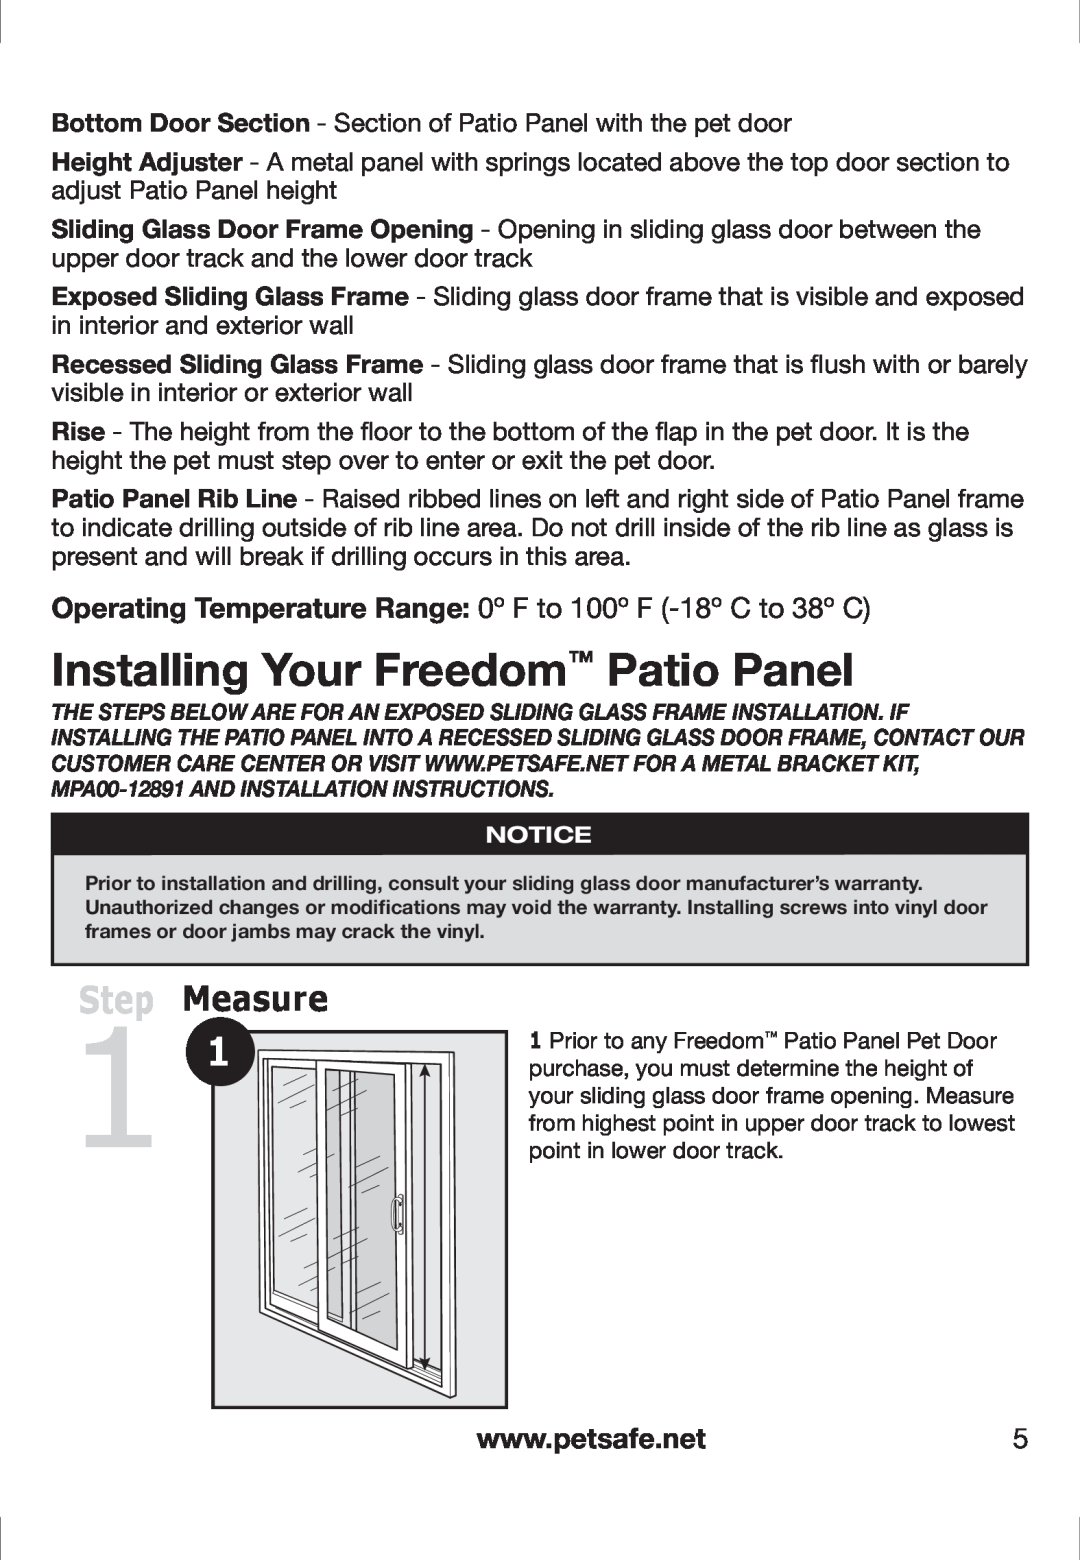 Petsafe PPA11-13132, PPA11-13141, PPA11-13135, PPA11-13134, PPA11-13129 Installing Your Freedom Patio Panel, Measure, Step 